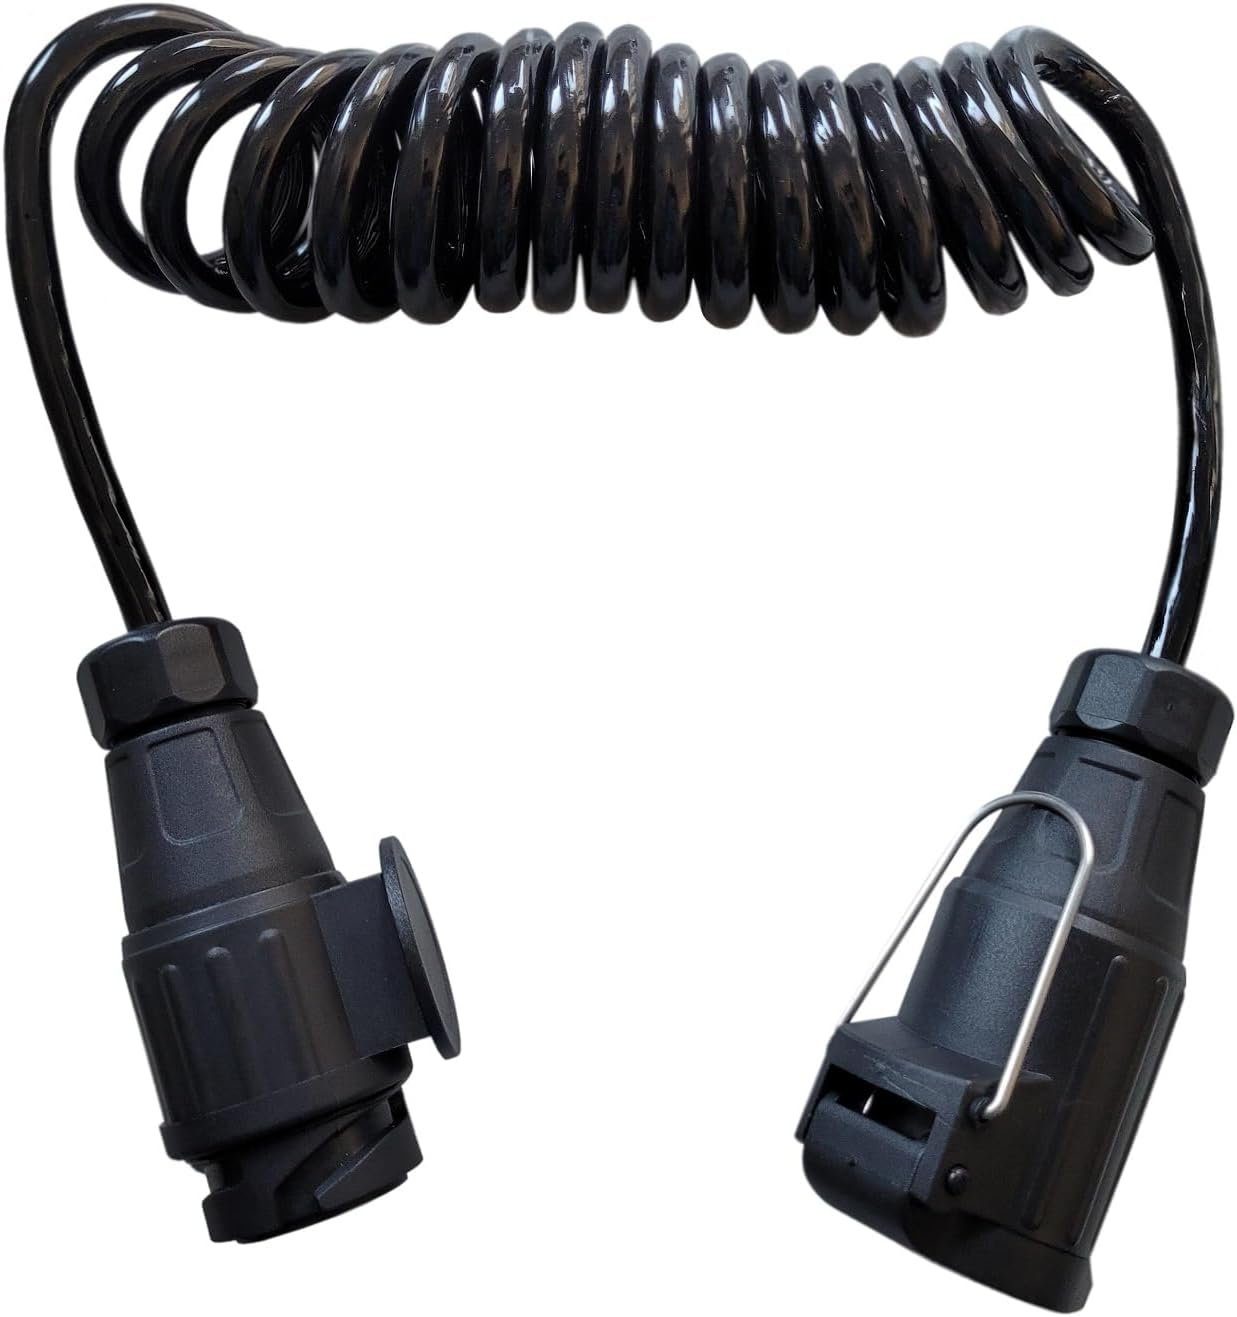 Buy ECOFLOW Ecoflow 606523 Adapter cable